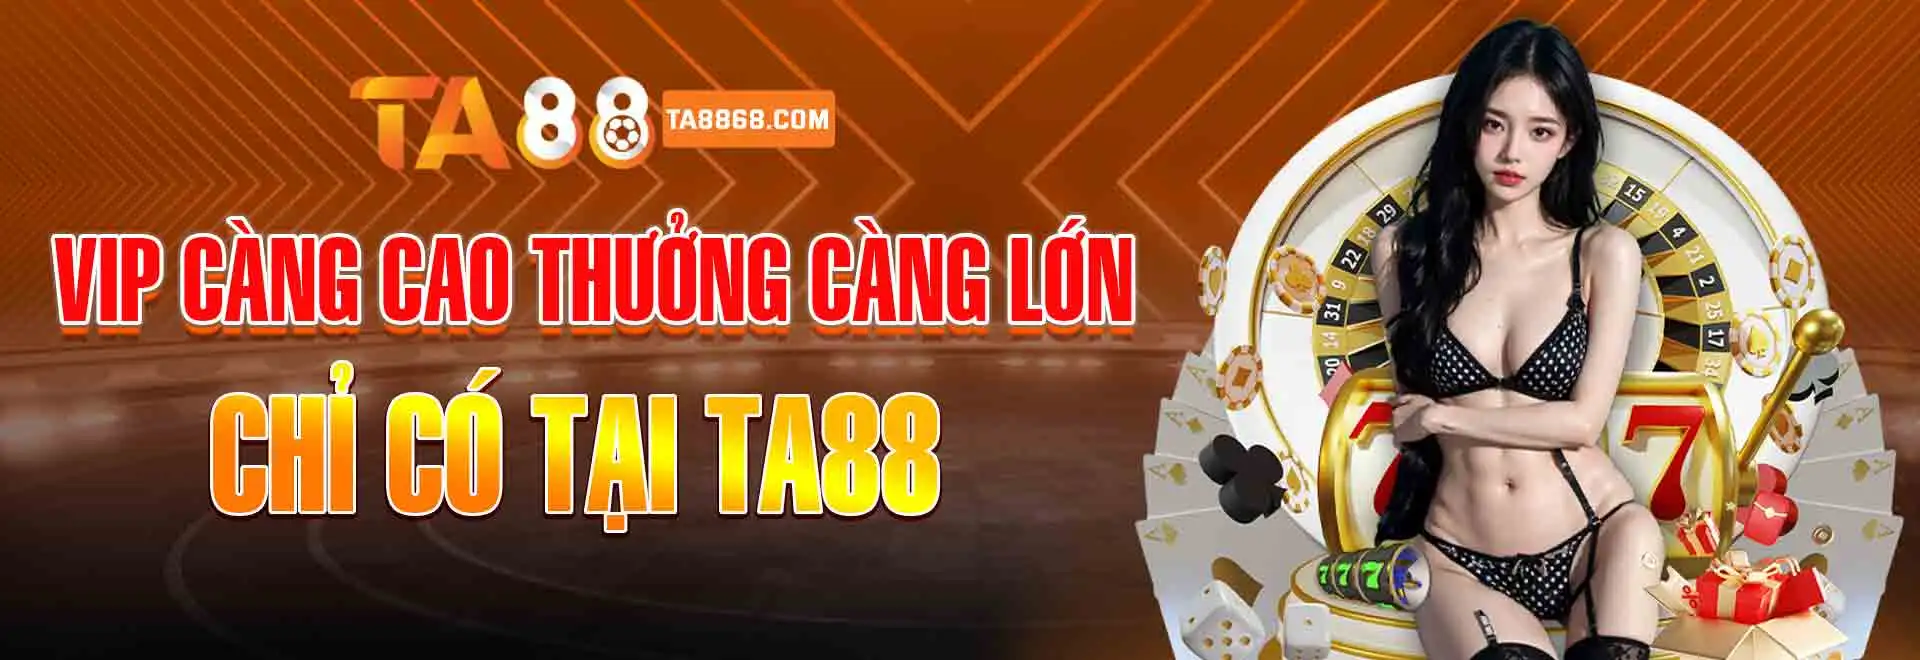 5-vip-cang-cao-thuong-cang-lon-chi-co-tai-ta88